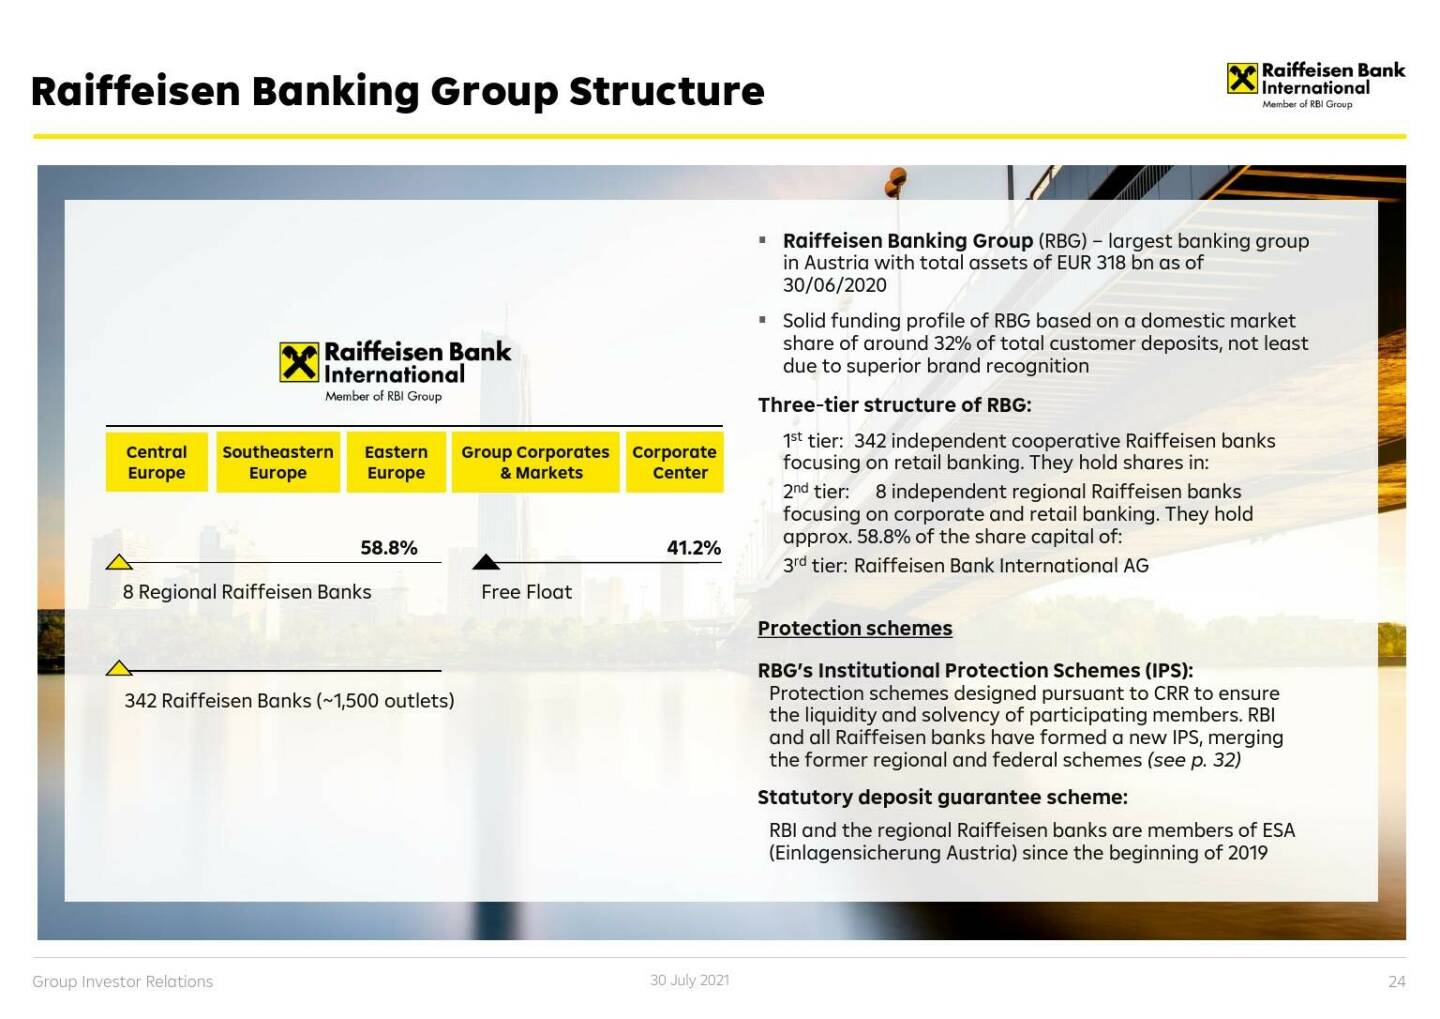 RBI - Raiffeisen Banking Group structure